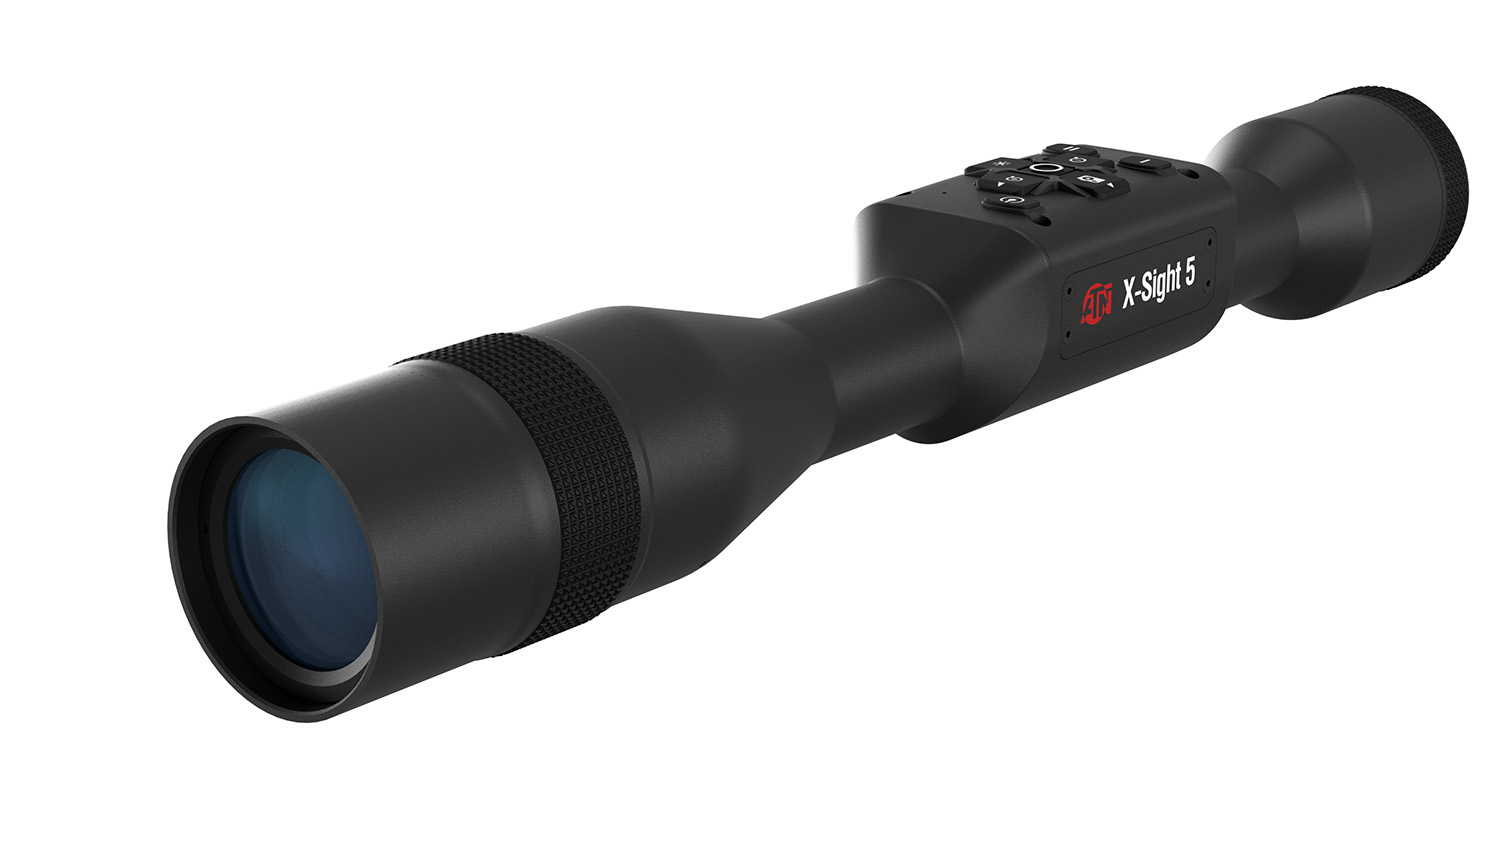 ATN DGWSXS5255P X-Sight 5 LRF Night Vision Rifle Scope, Black Anodized 5-25x30mm, Gen 5, Smart Mil Dot Reticle, Features Laser Rangefinder